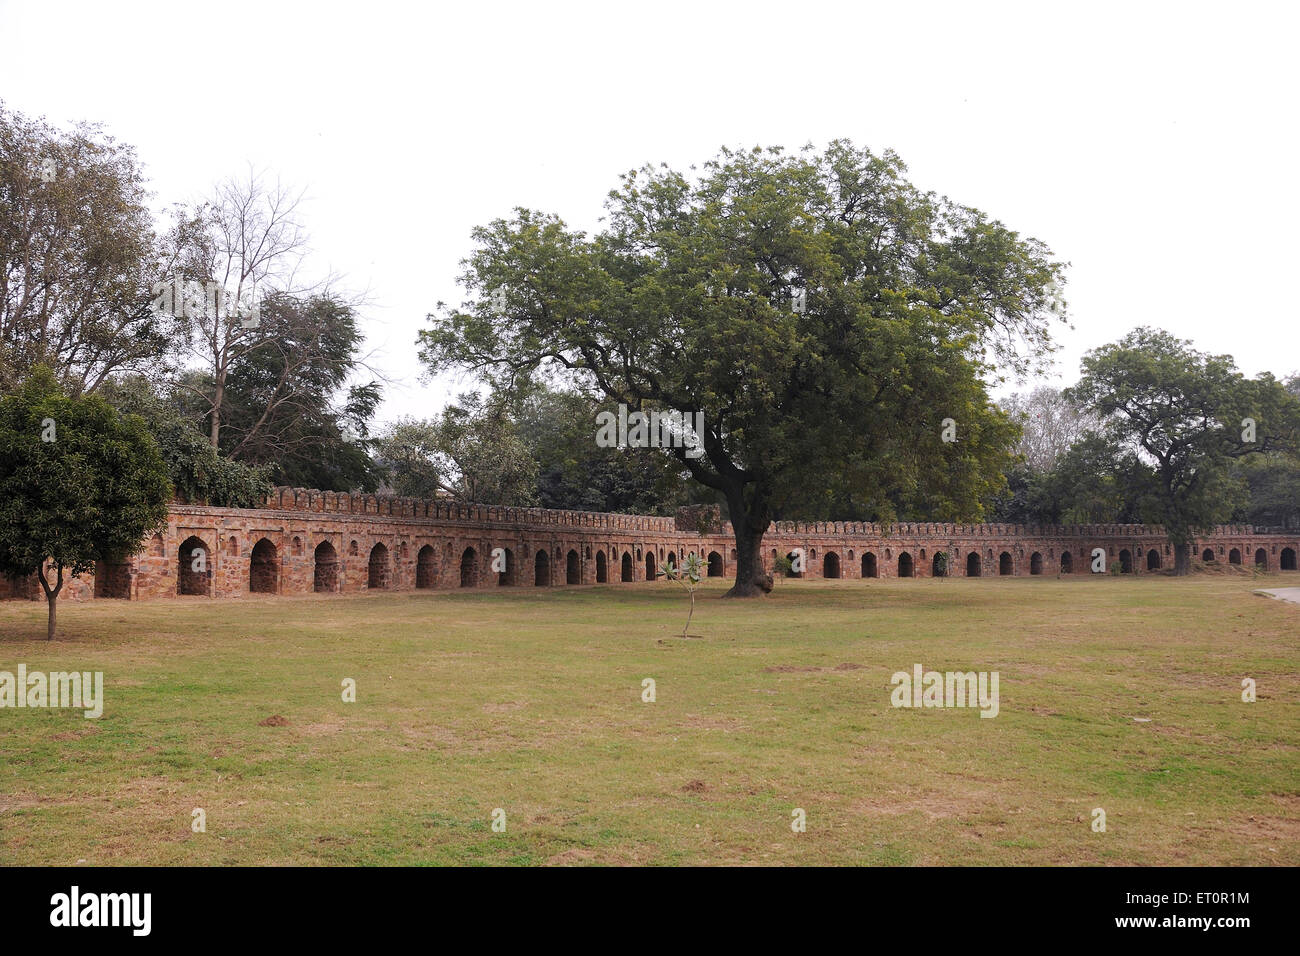 Isha Khan tomb garden, Humayun's Tomb, Humayun tomb, UNESCO world heritage site, Delhi, India Stock Photo